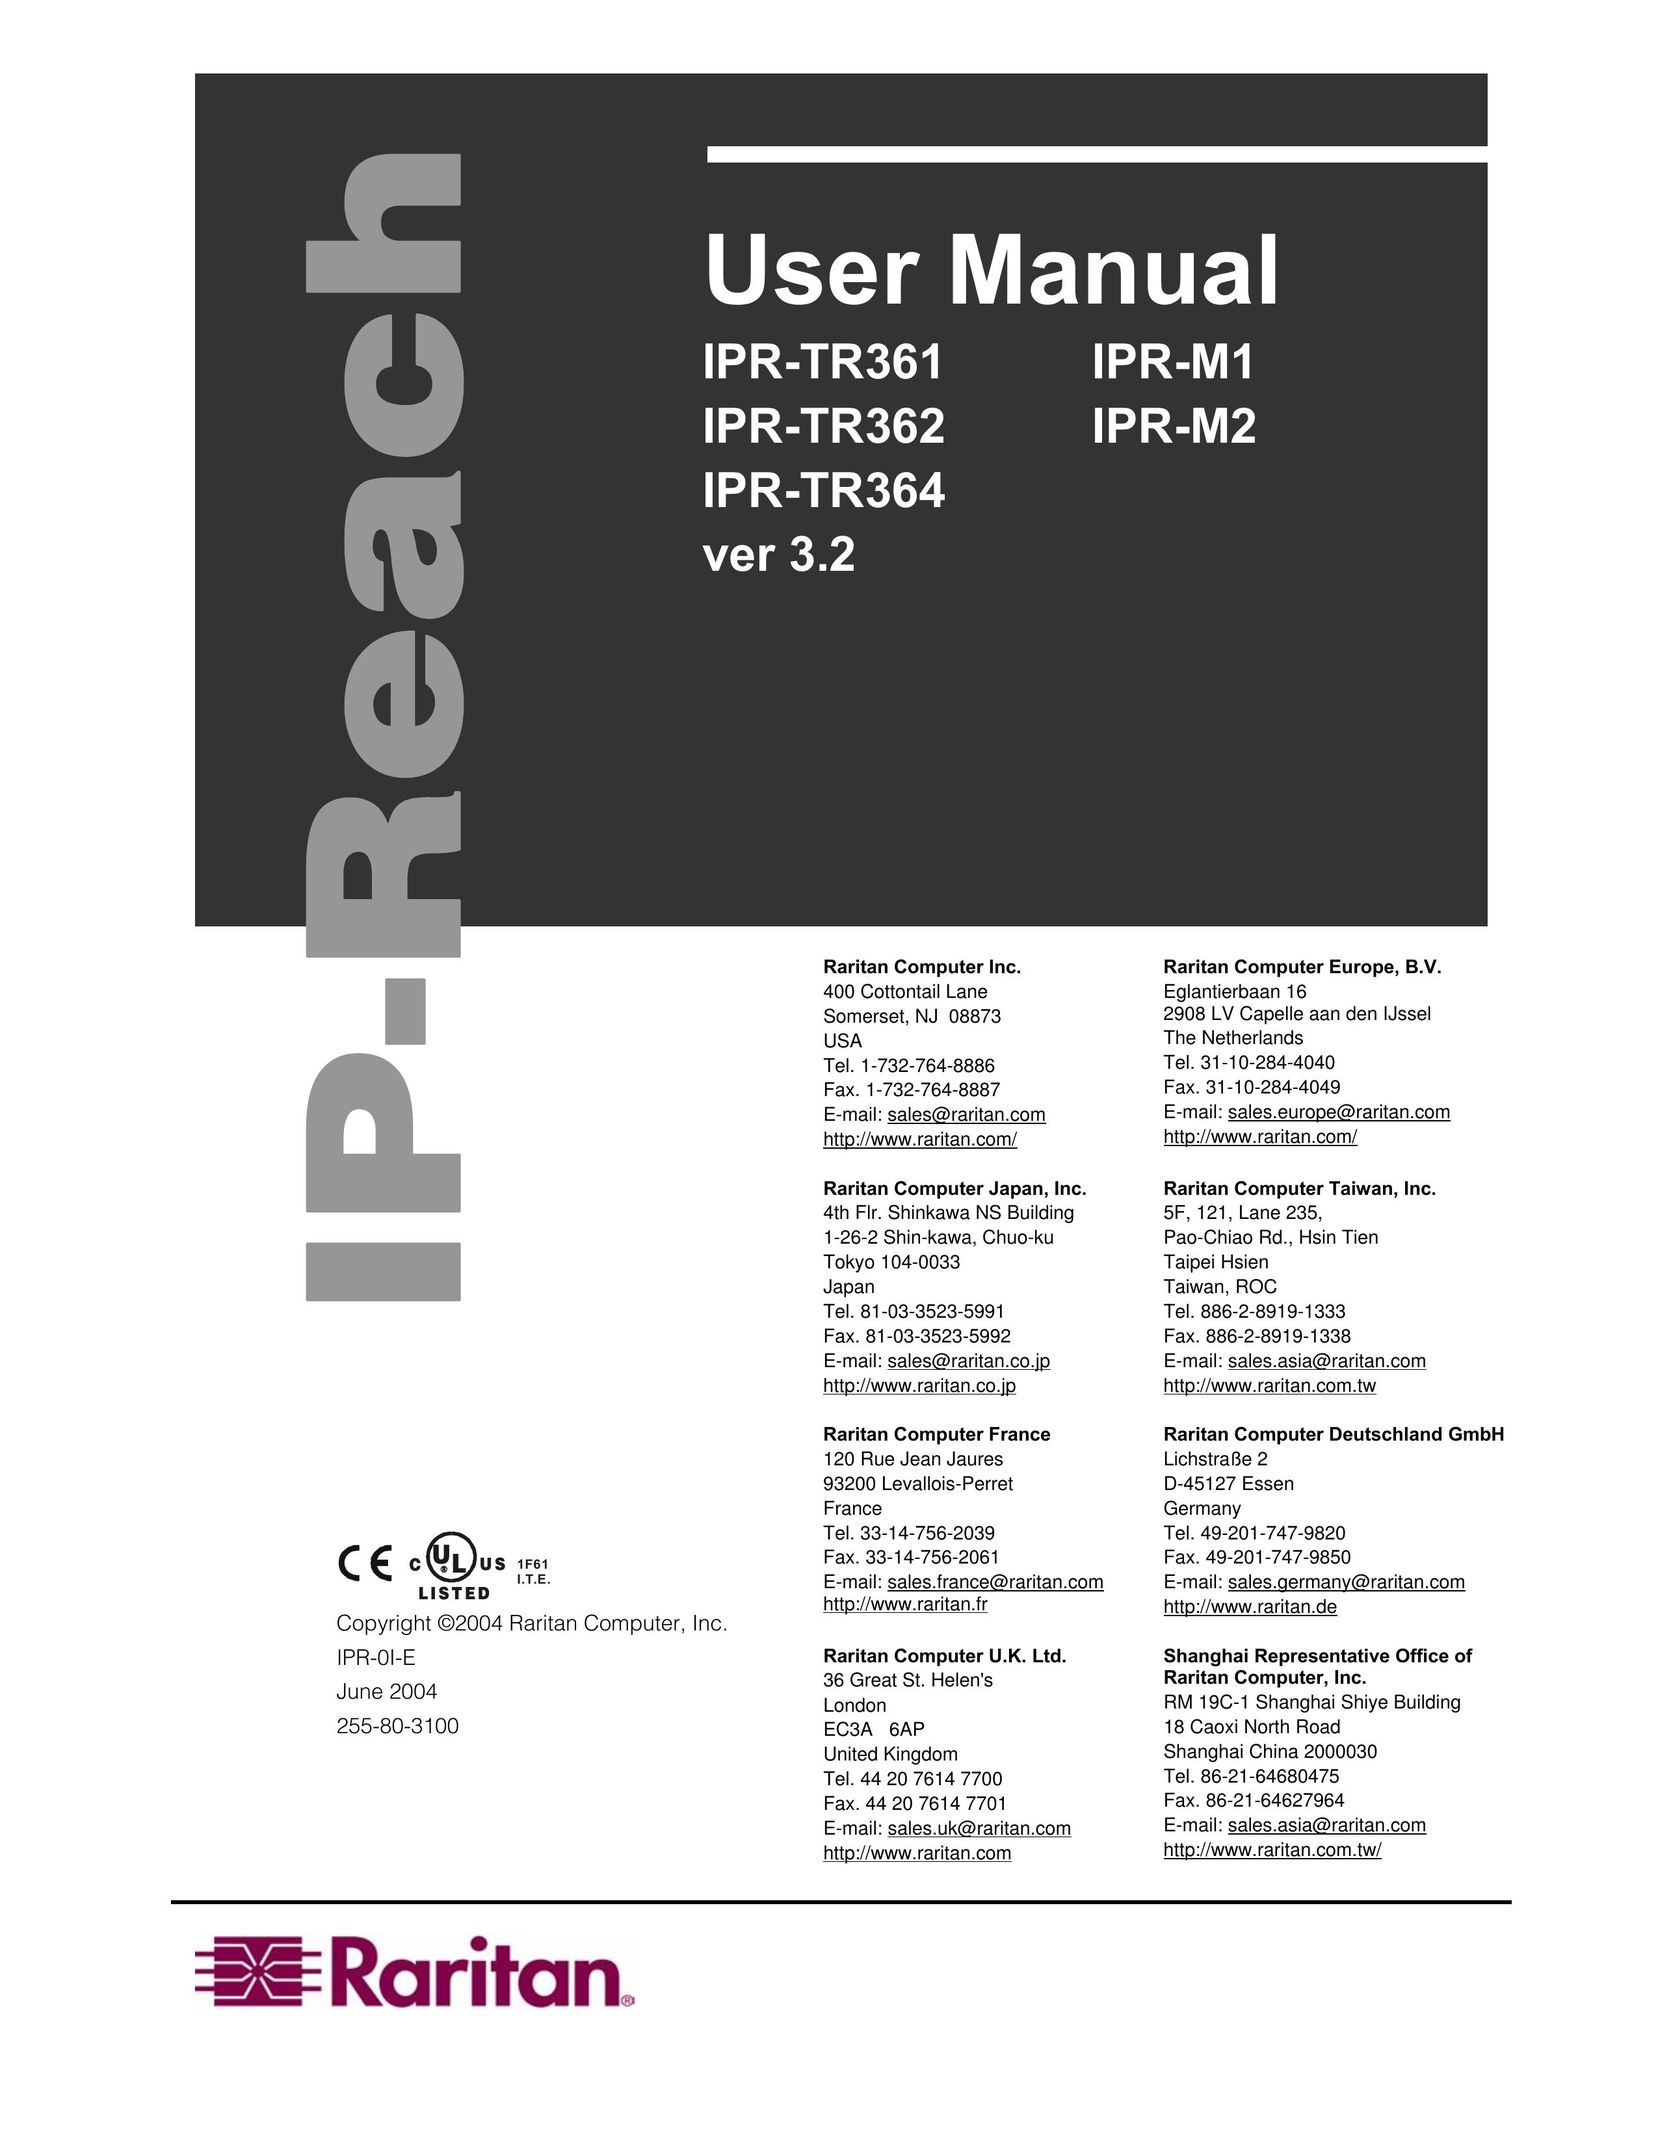 Raritan Computer IPR-TR362 Network Card User Manual